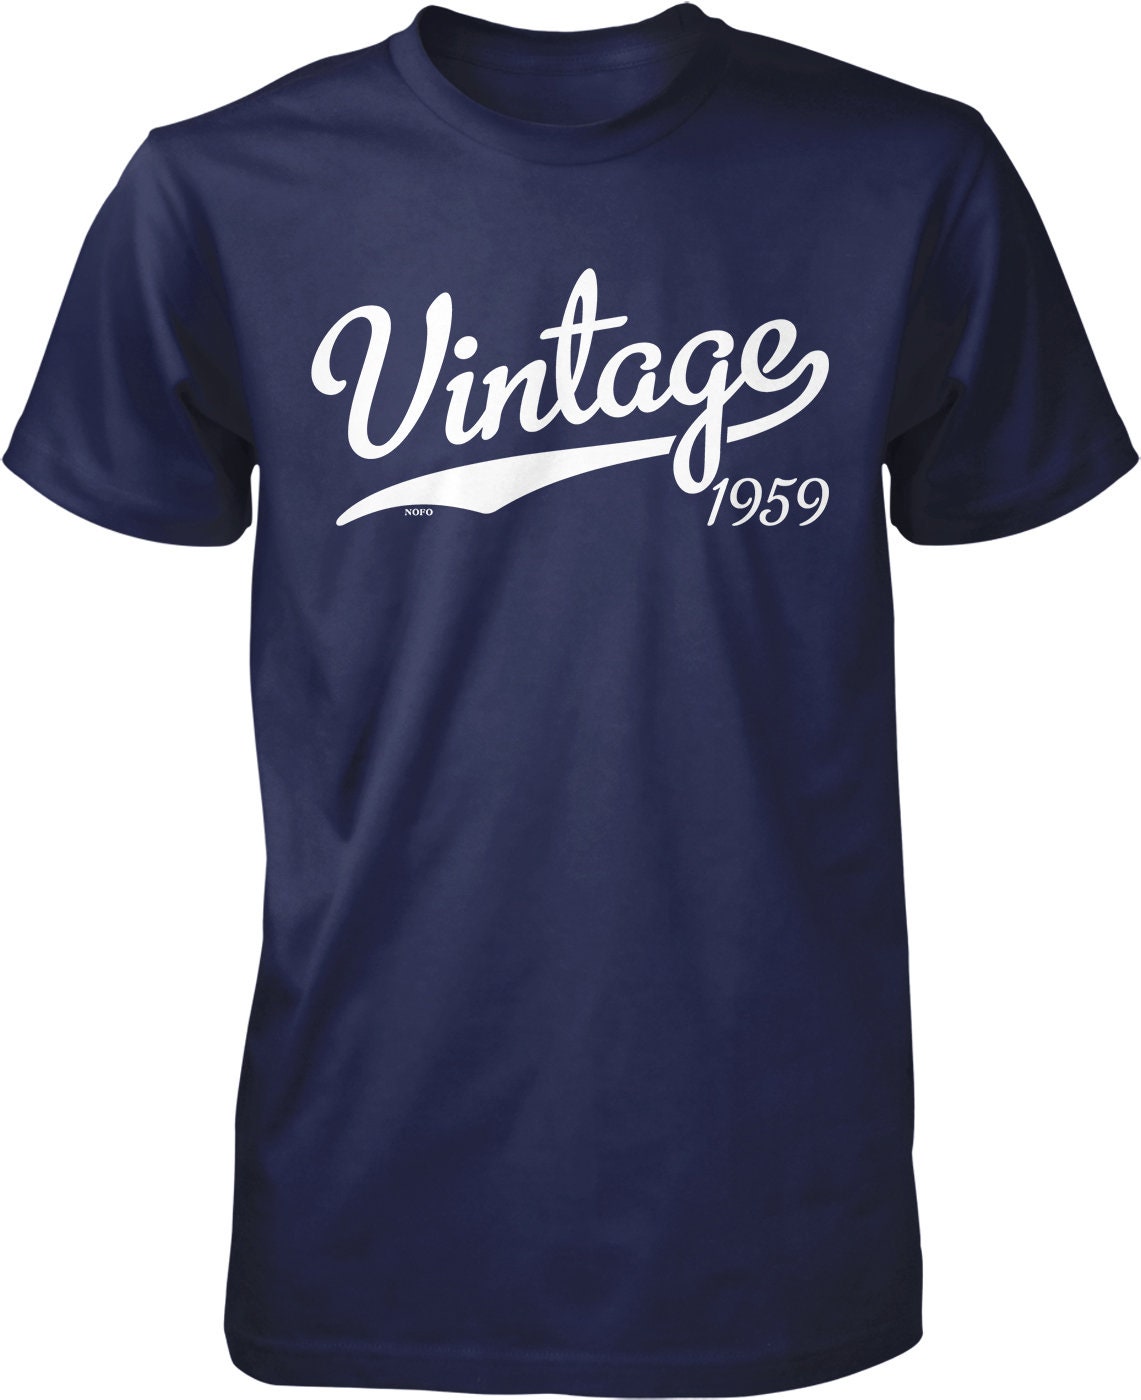 Vintage 1959 Men's T-shirt NOFO_01645 | Etsy